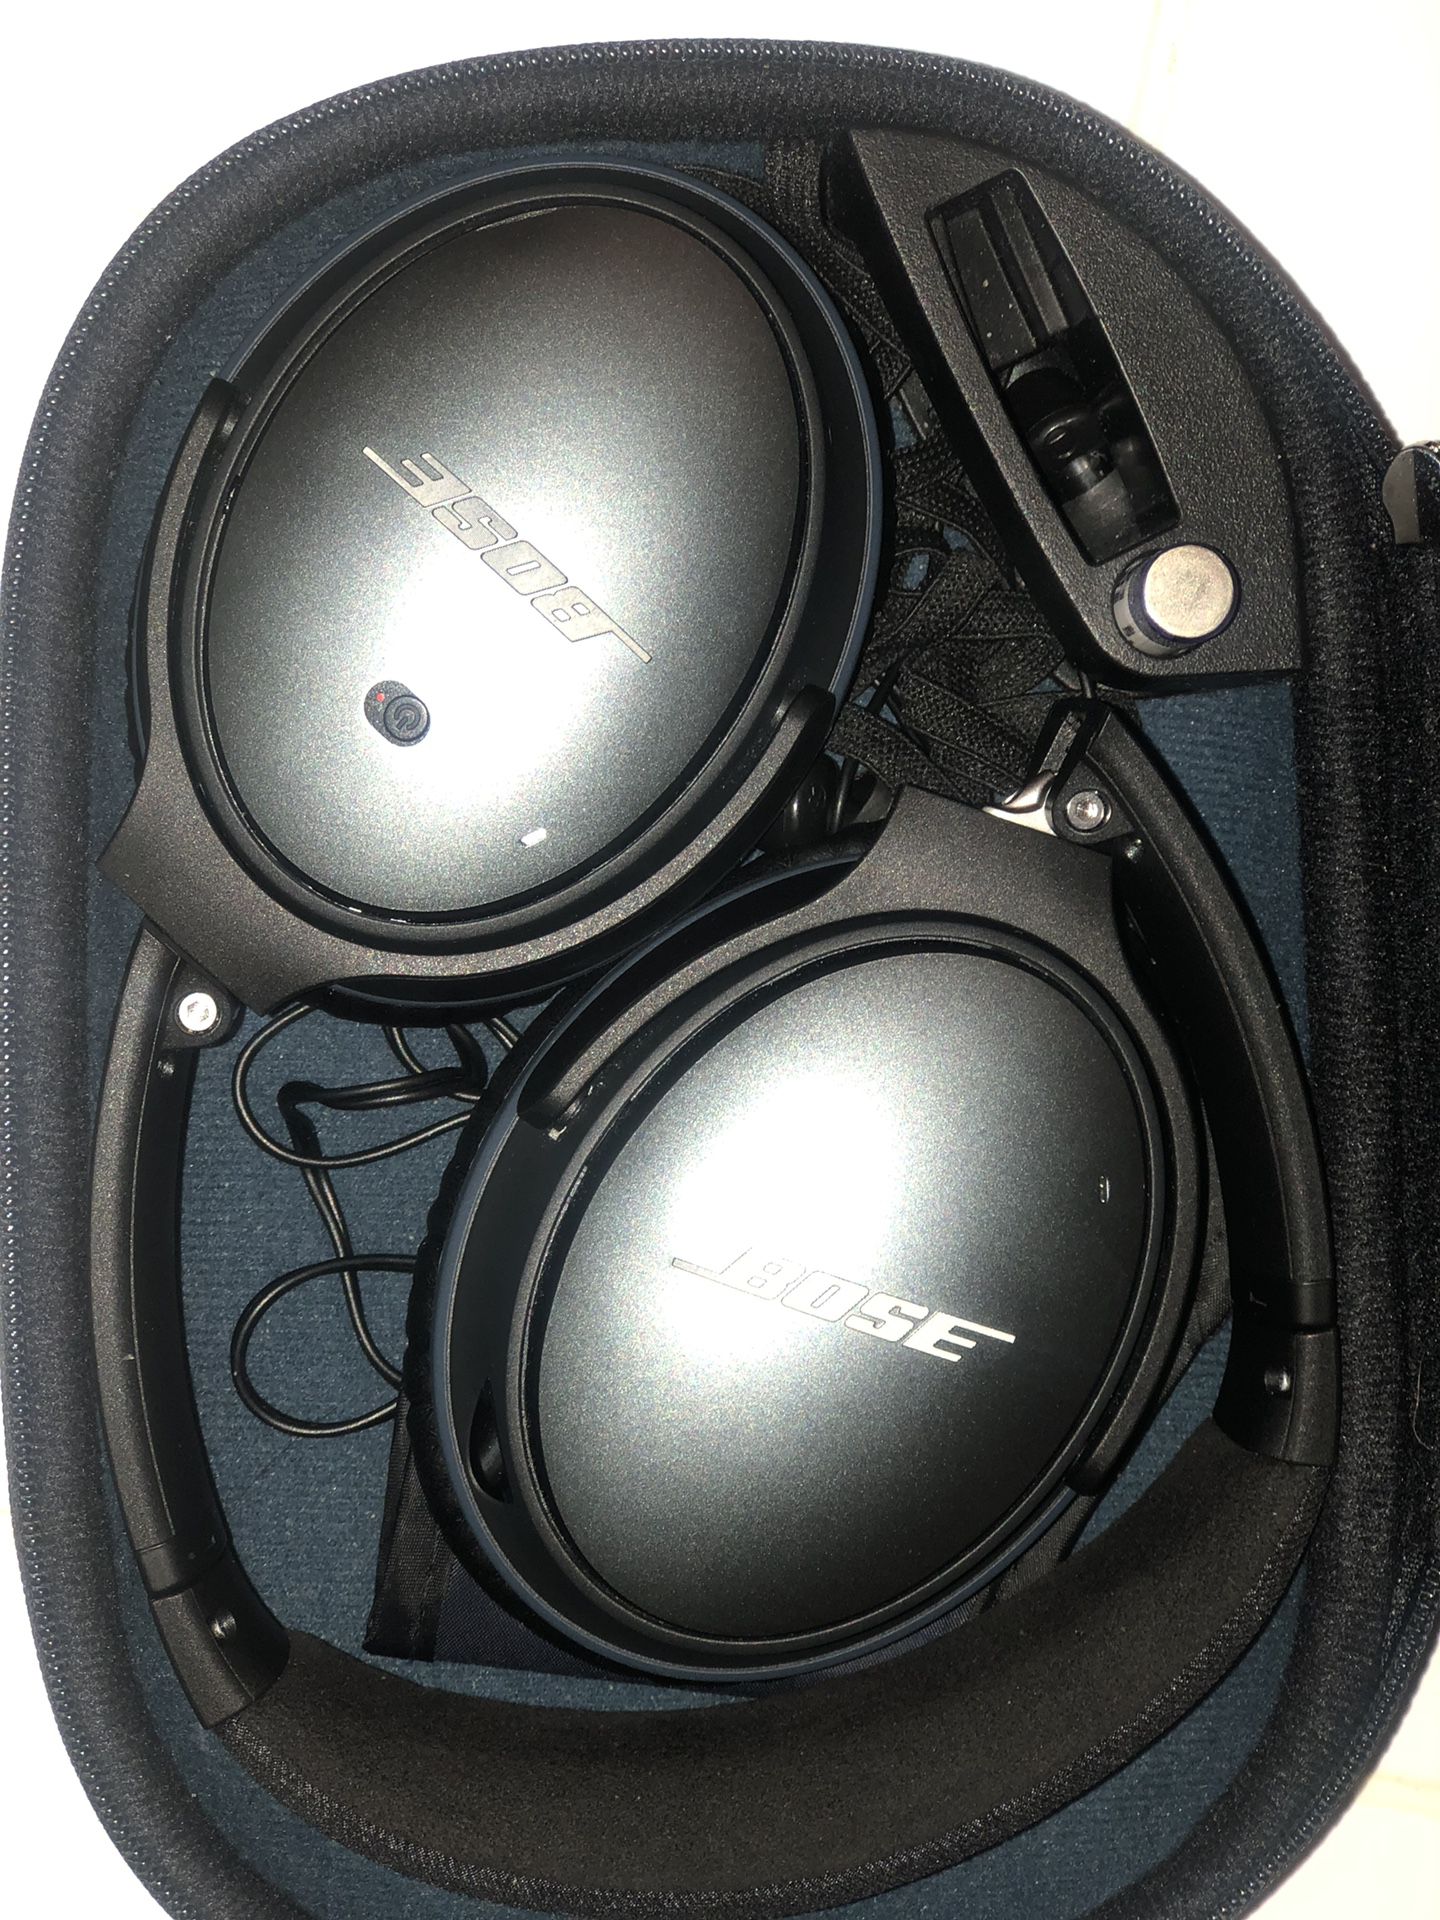 Bose wireless noise cancellation headphones ( like new )